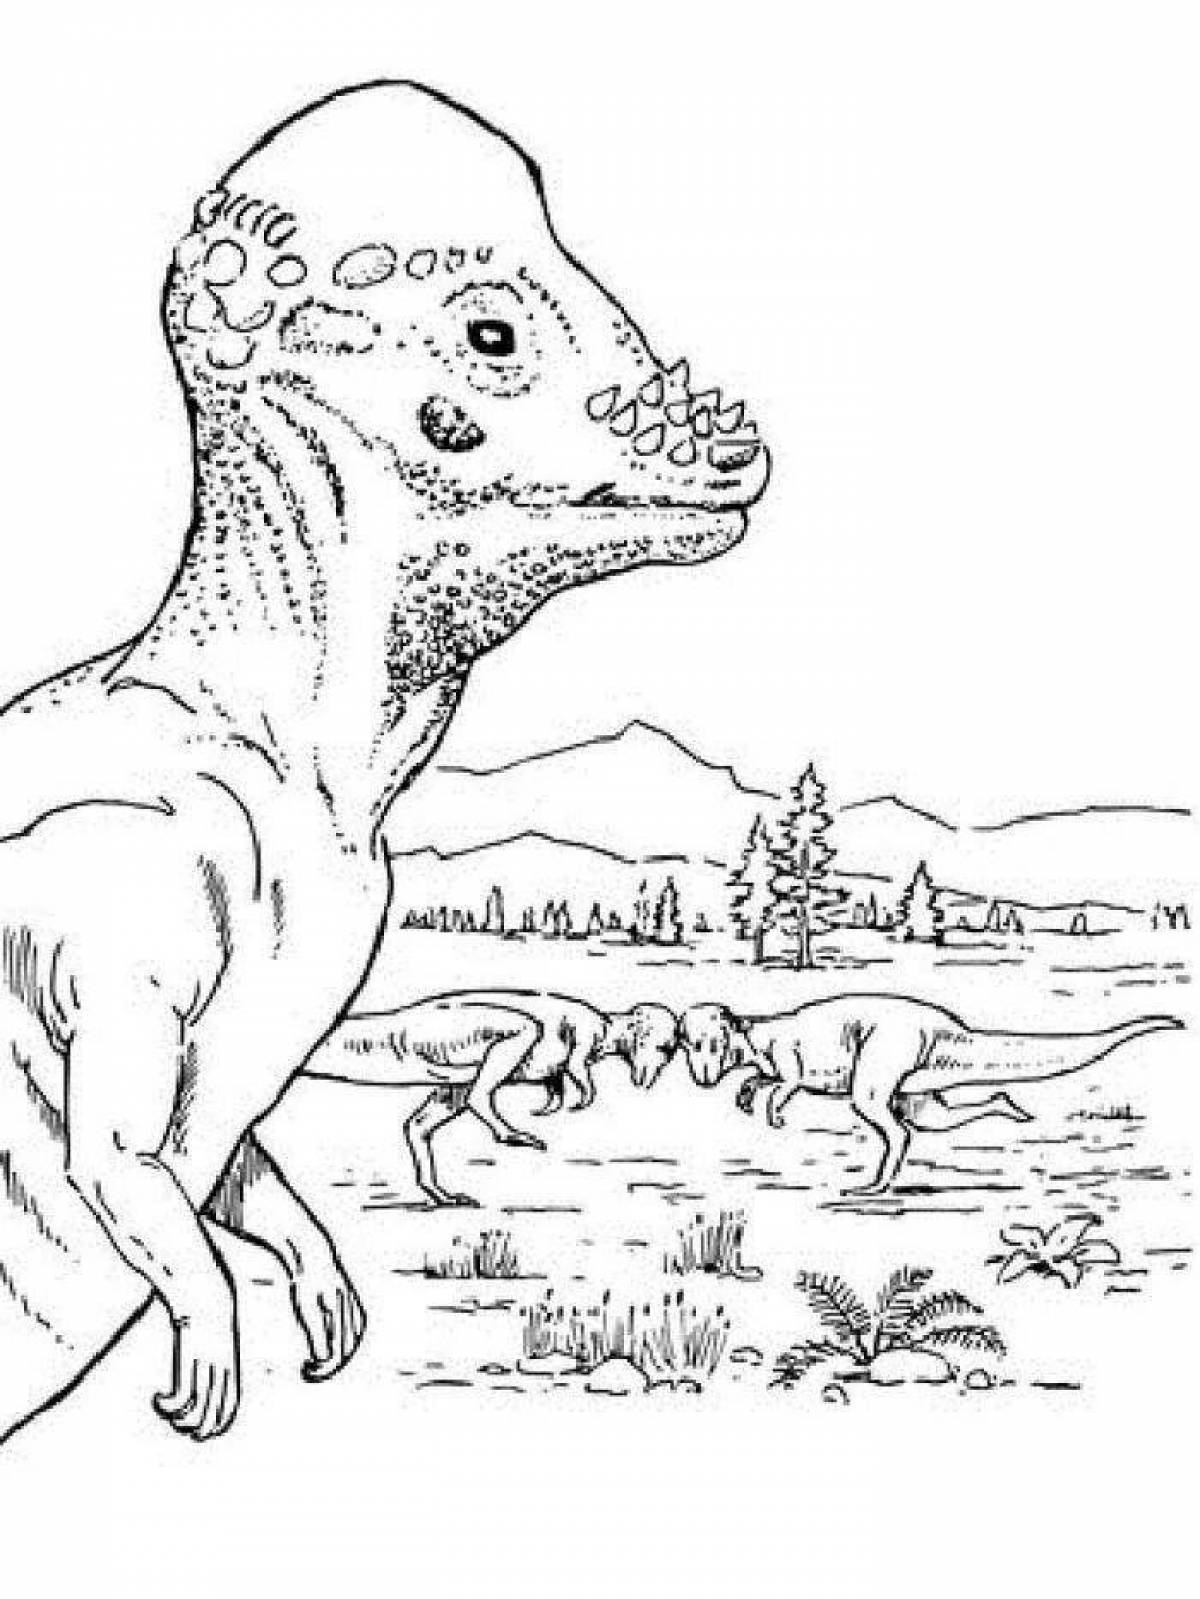 Fascinating Pachycephalosaurus coloring book